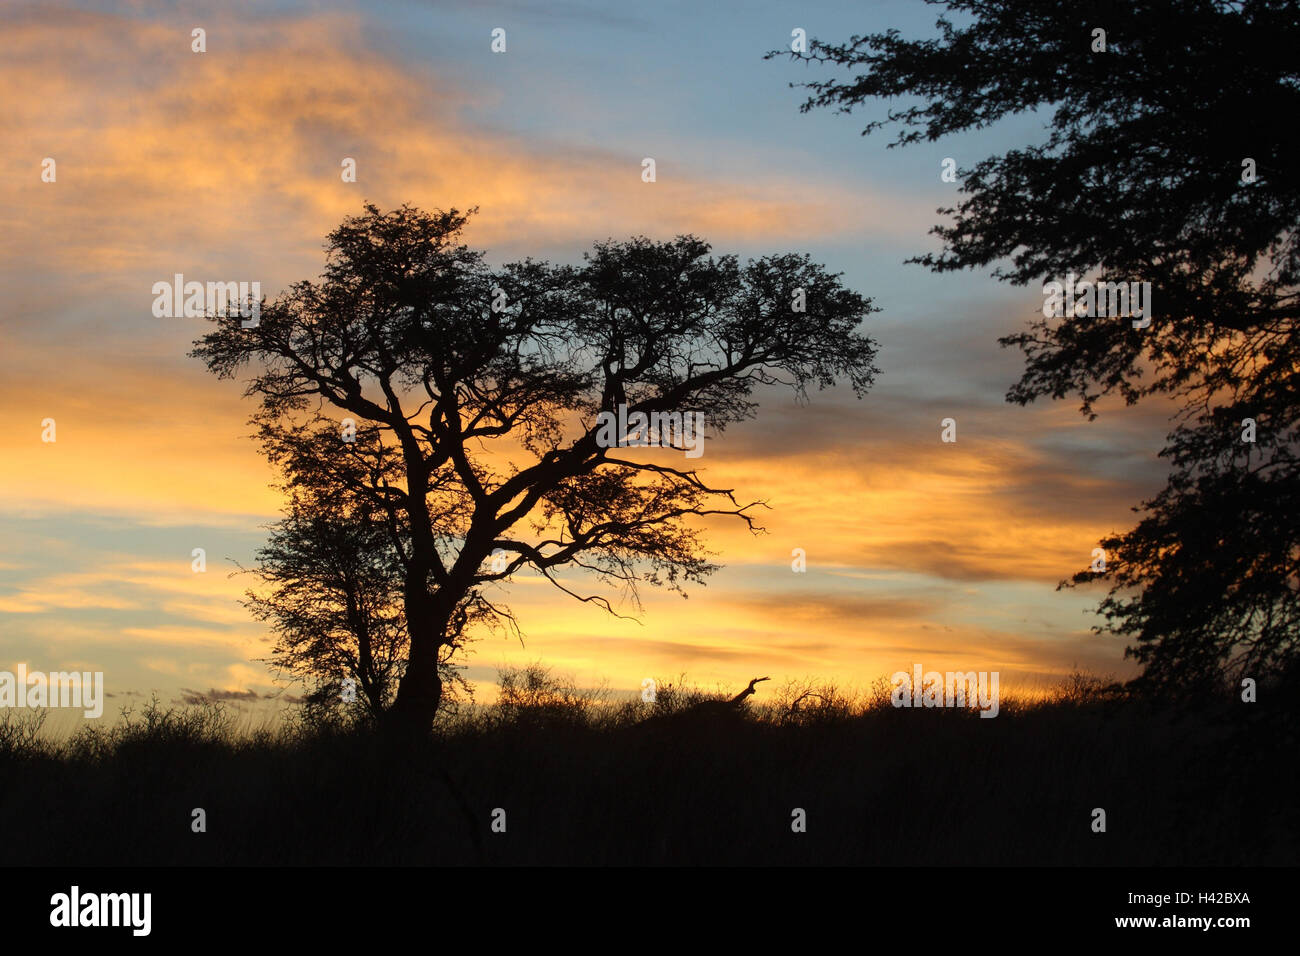 Sundown in the Kalahari, trees, silhouette, Stock Photo